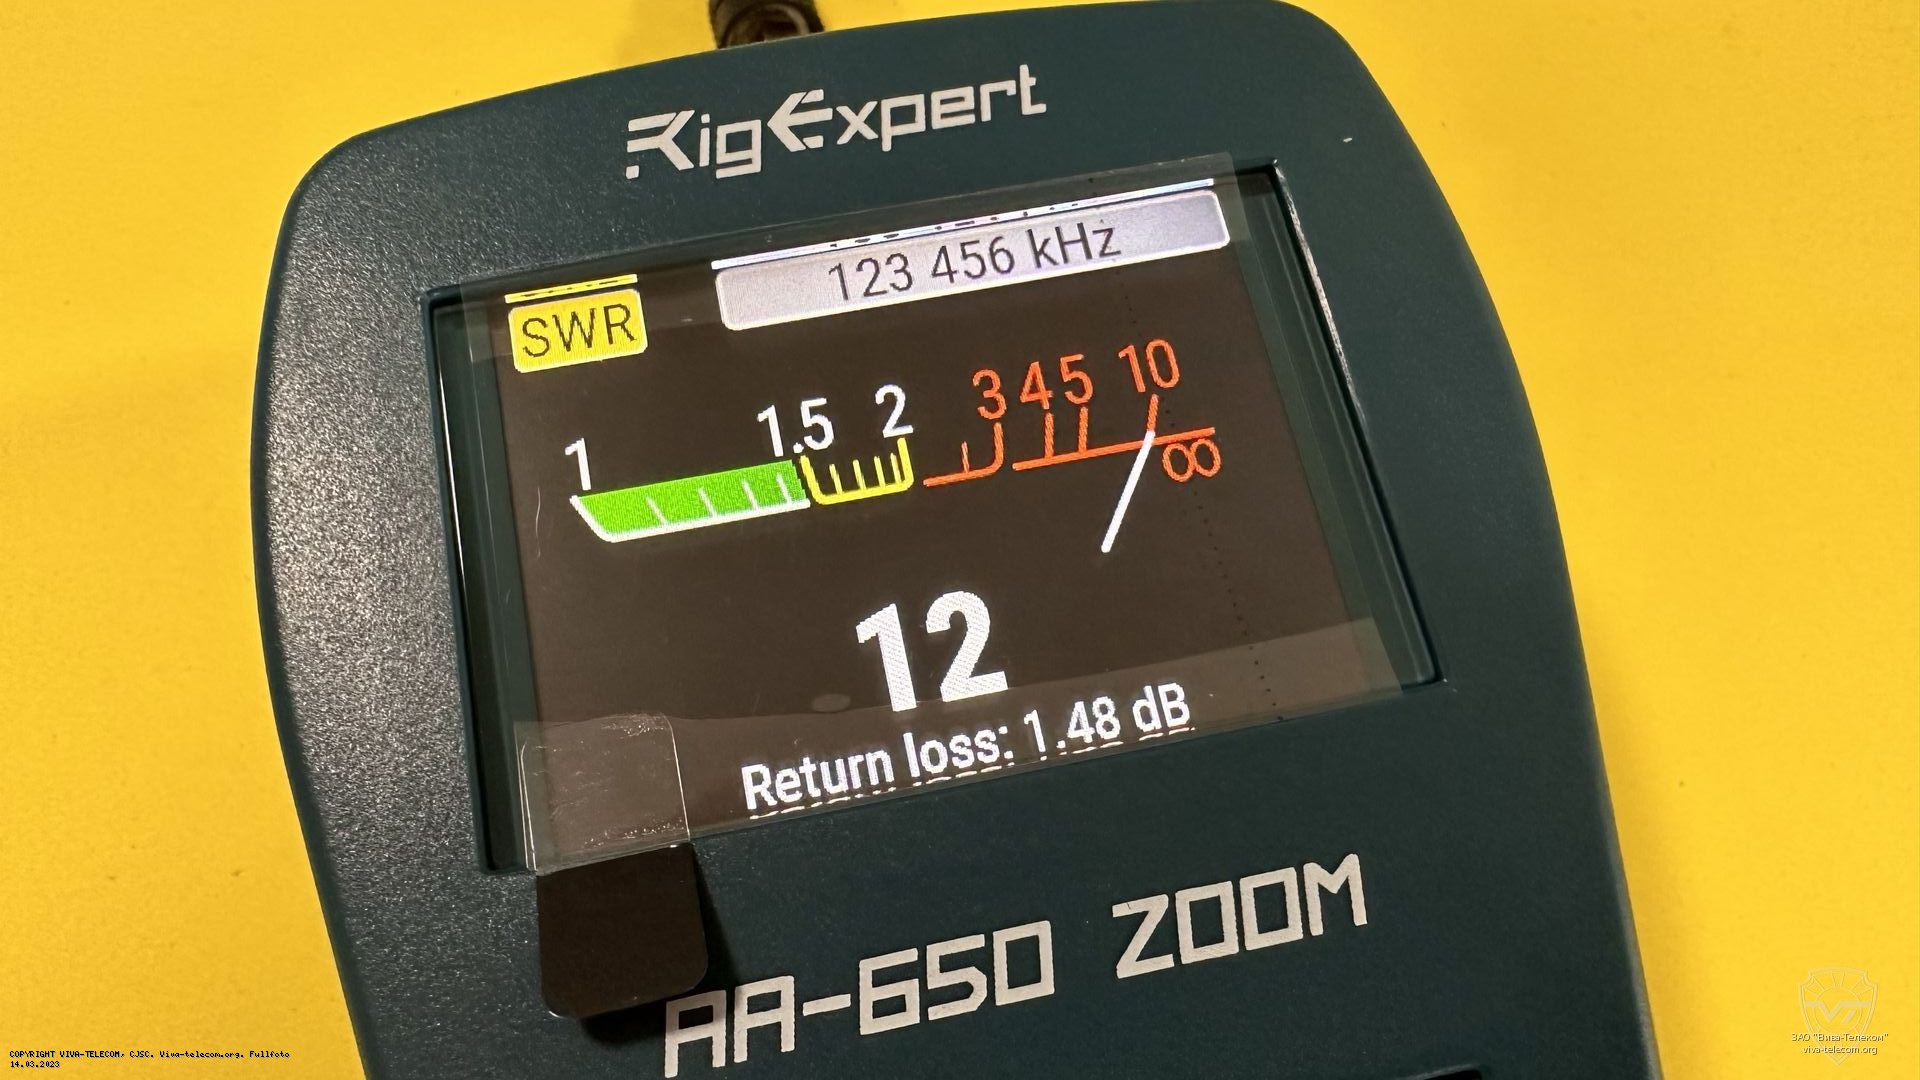    RigExpert AA-650 Zoom